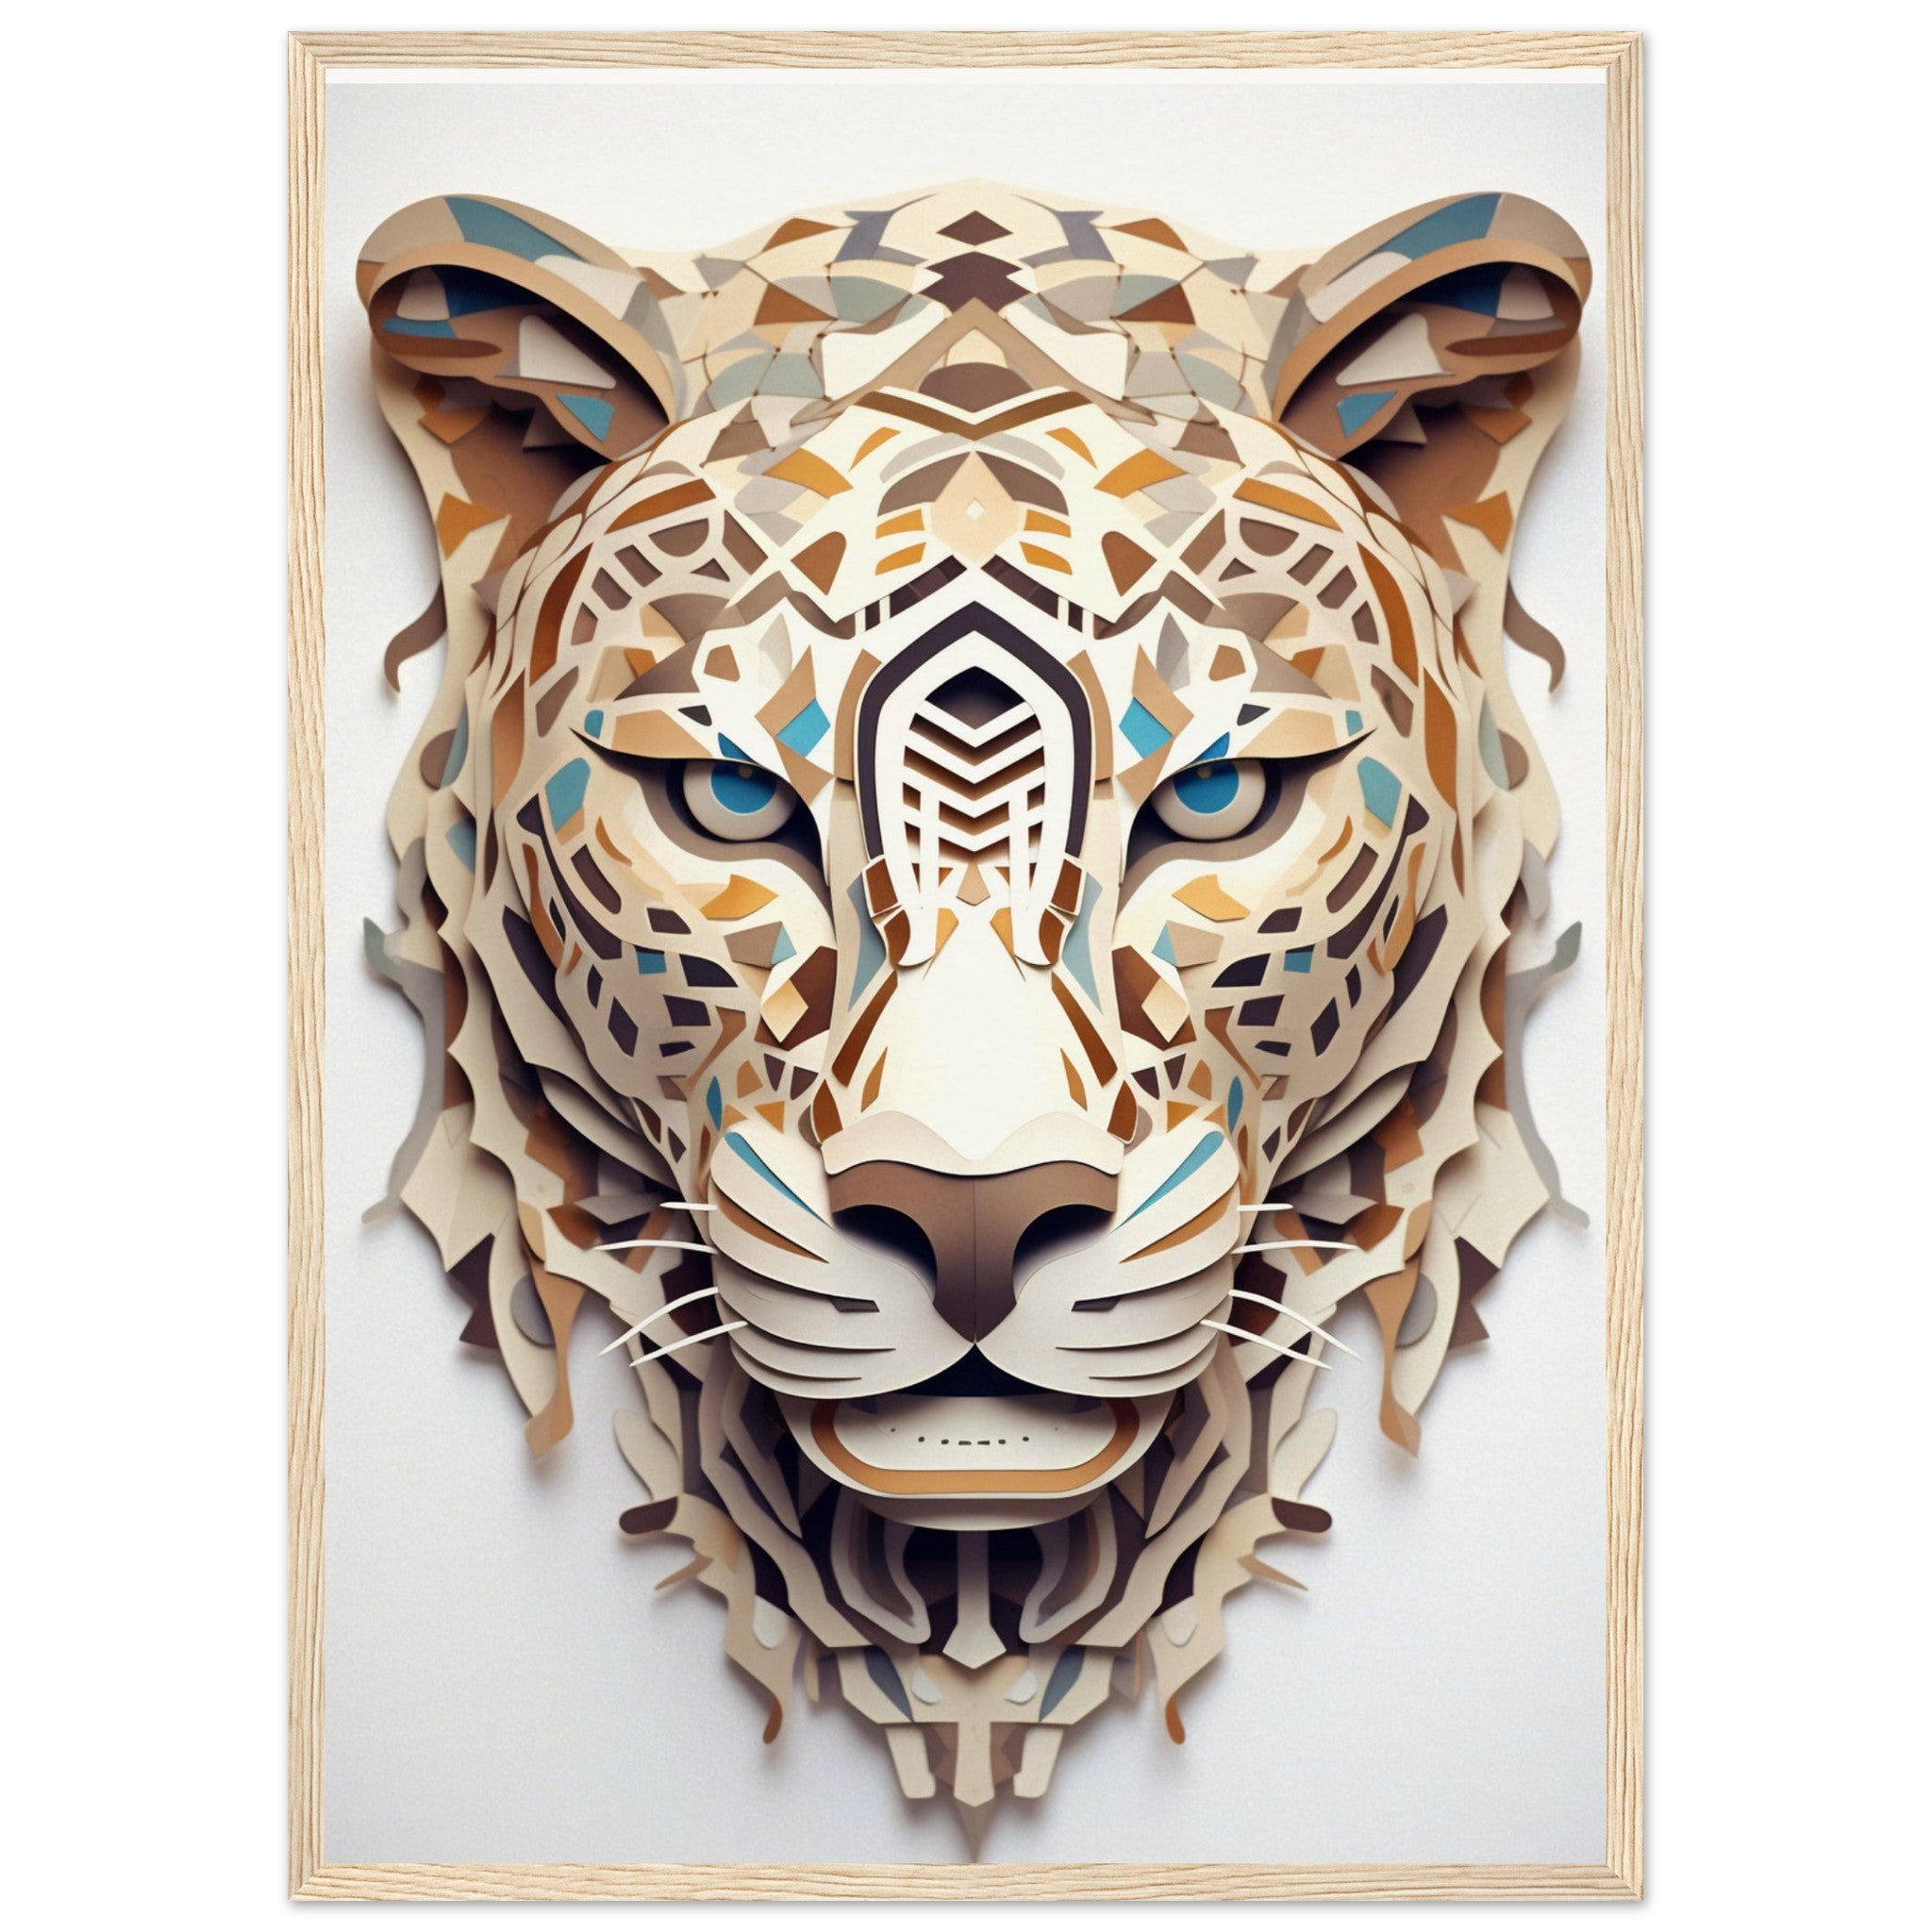 Geometric jaguar face close up - immersiarts